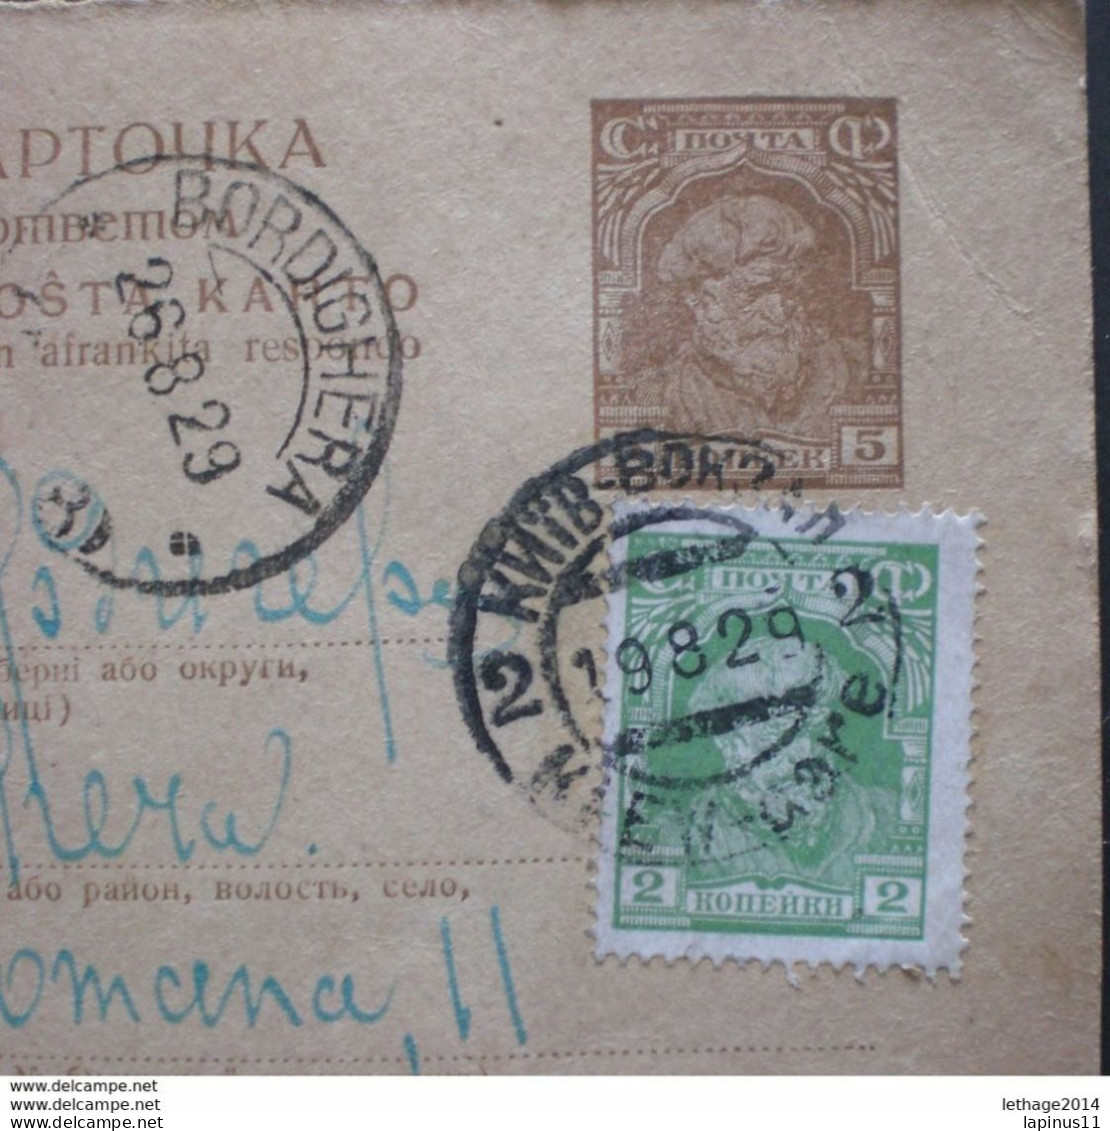 RUSSIA RUSSIE РОССИЯ STAMPS POST CARD 1929 TRICENTENAIRE DE L AVENEMENT DE ROMANOW RUSSLAND TO ITALY RRR RIF. TAGG (161) - Storia Postale